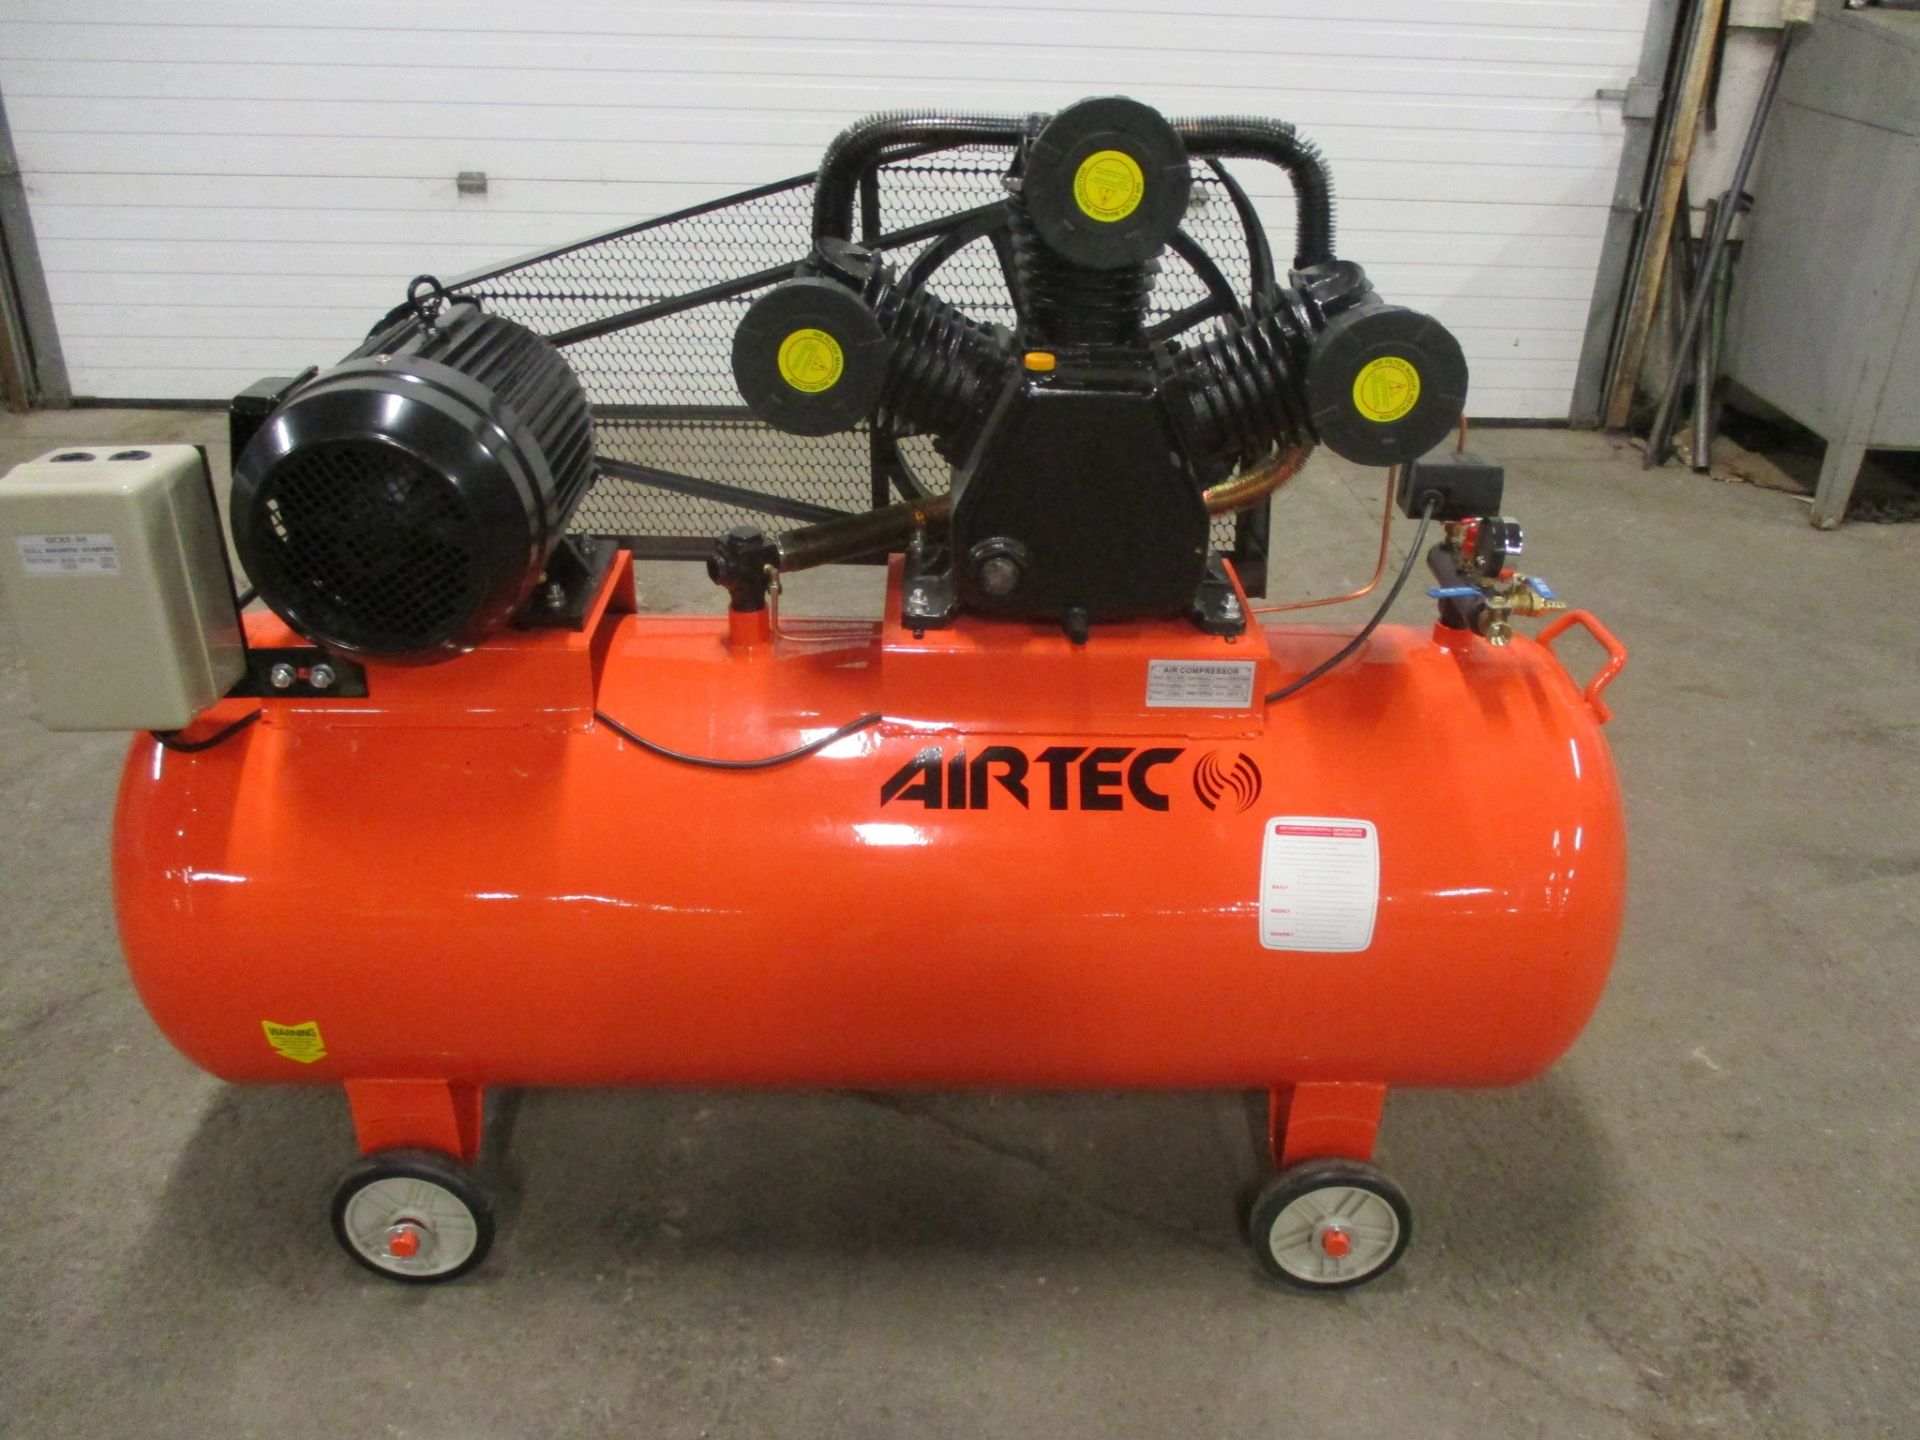 Airtec 10HP Air Compressor - MINT UNUSED COMPRESSOR with 80 Gallon horizontal compressed air